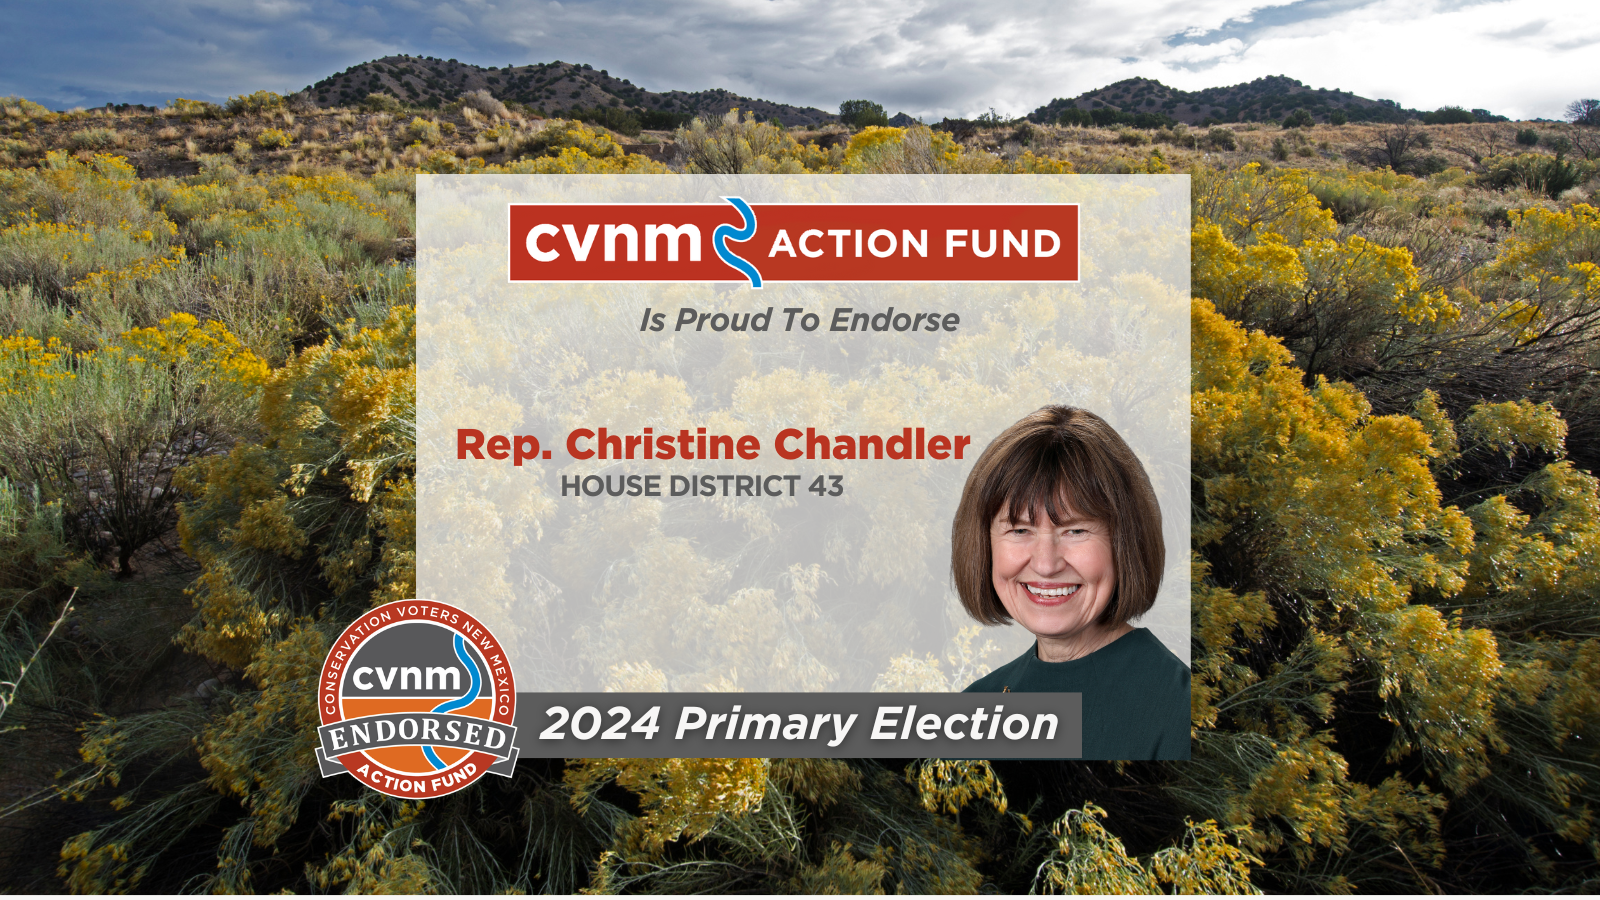 Rep. Christine Chandler